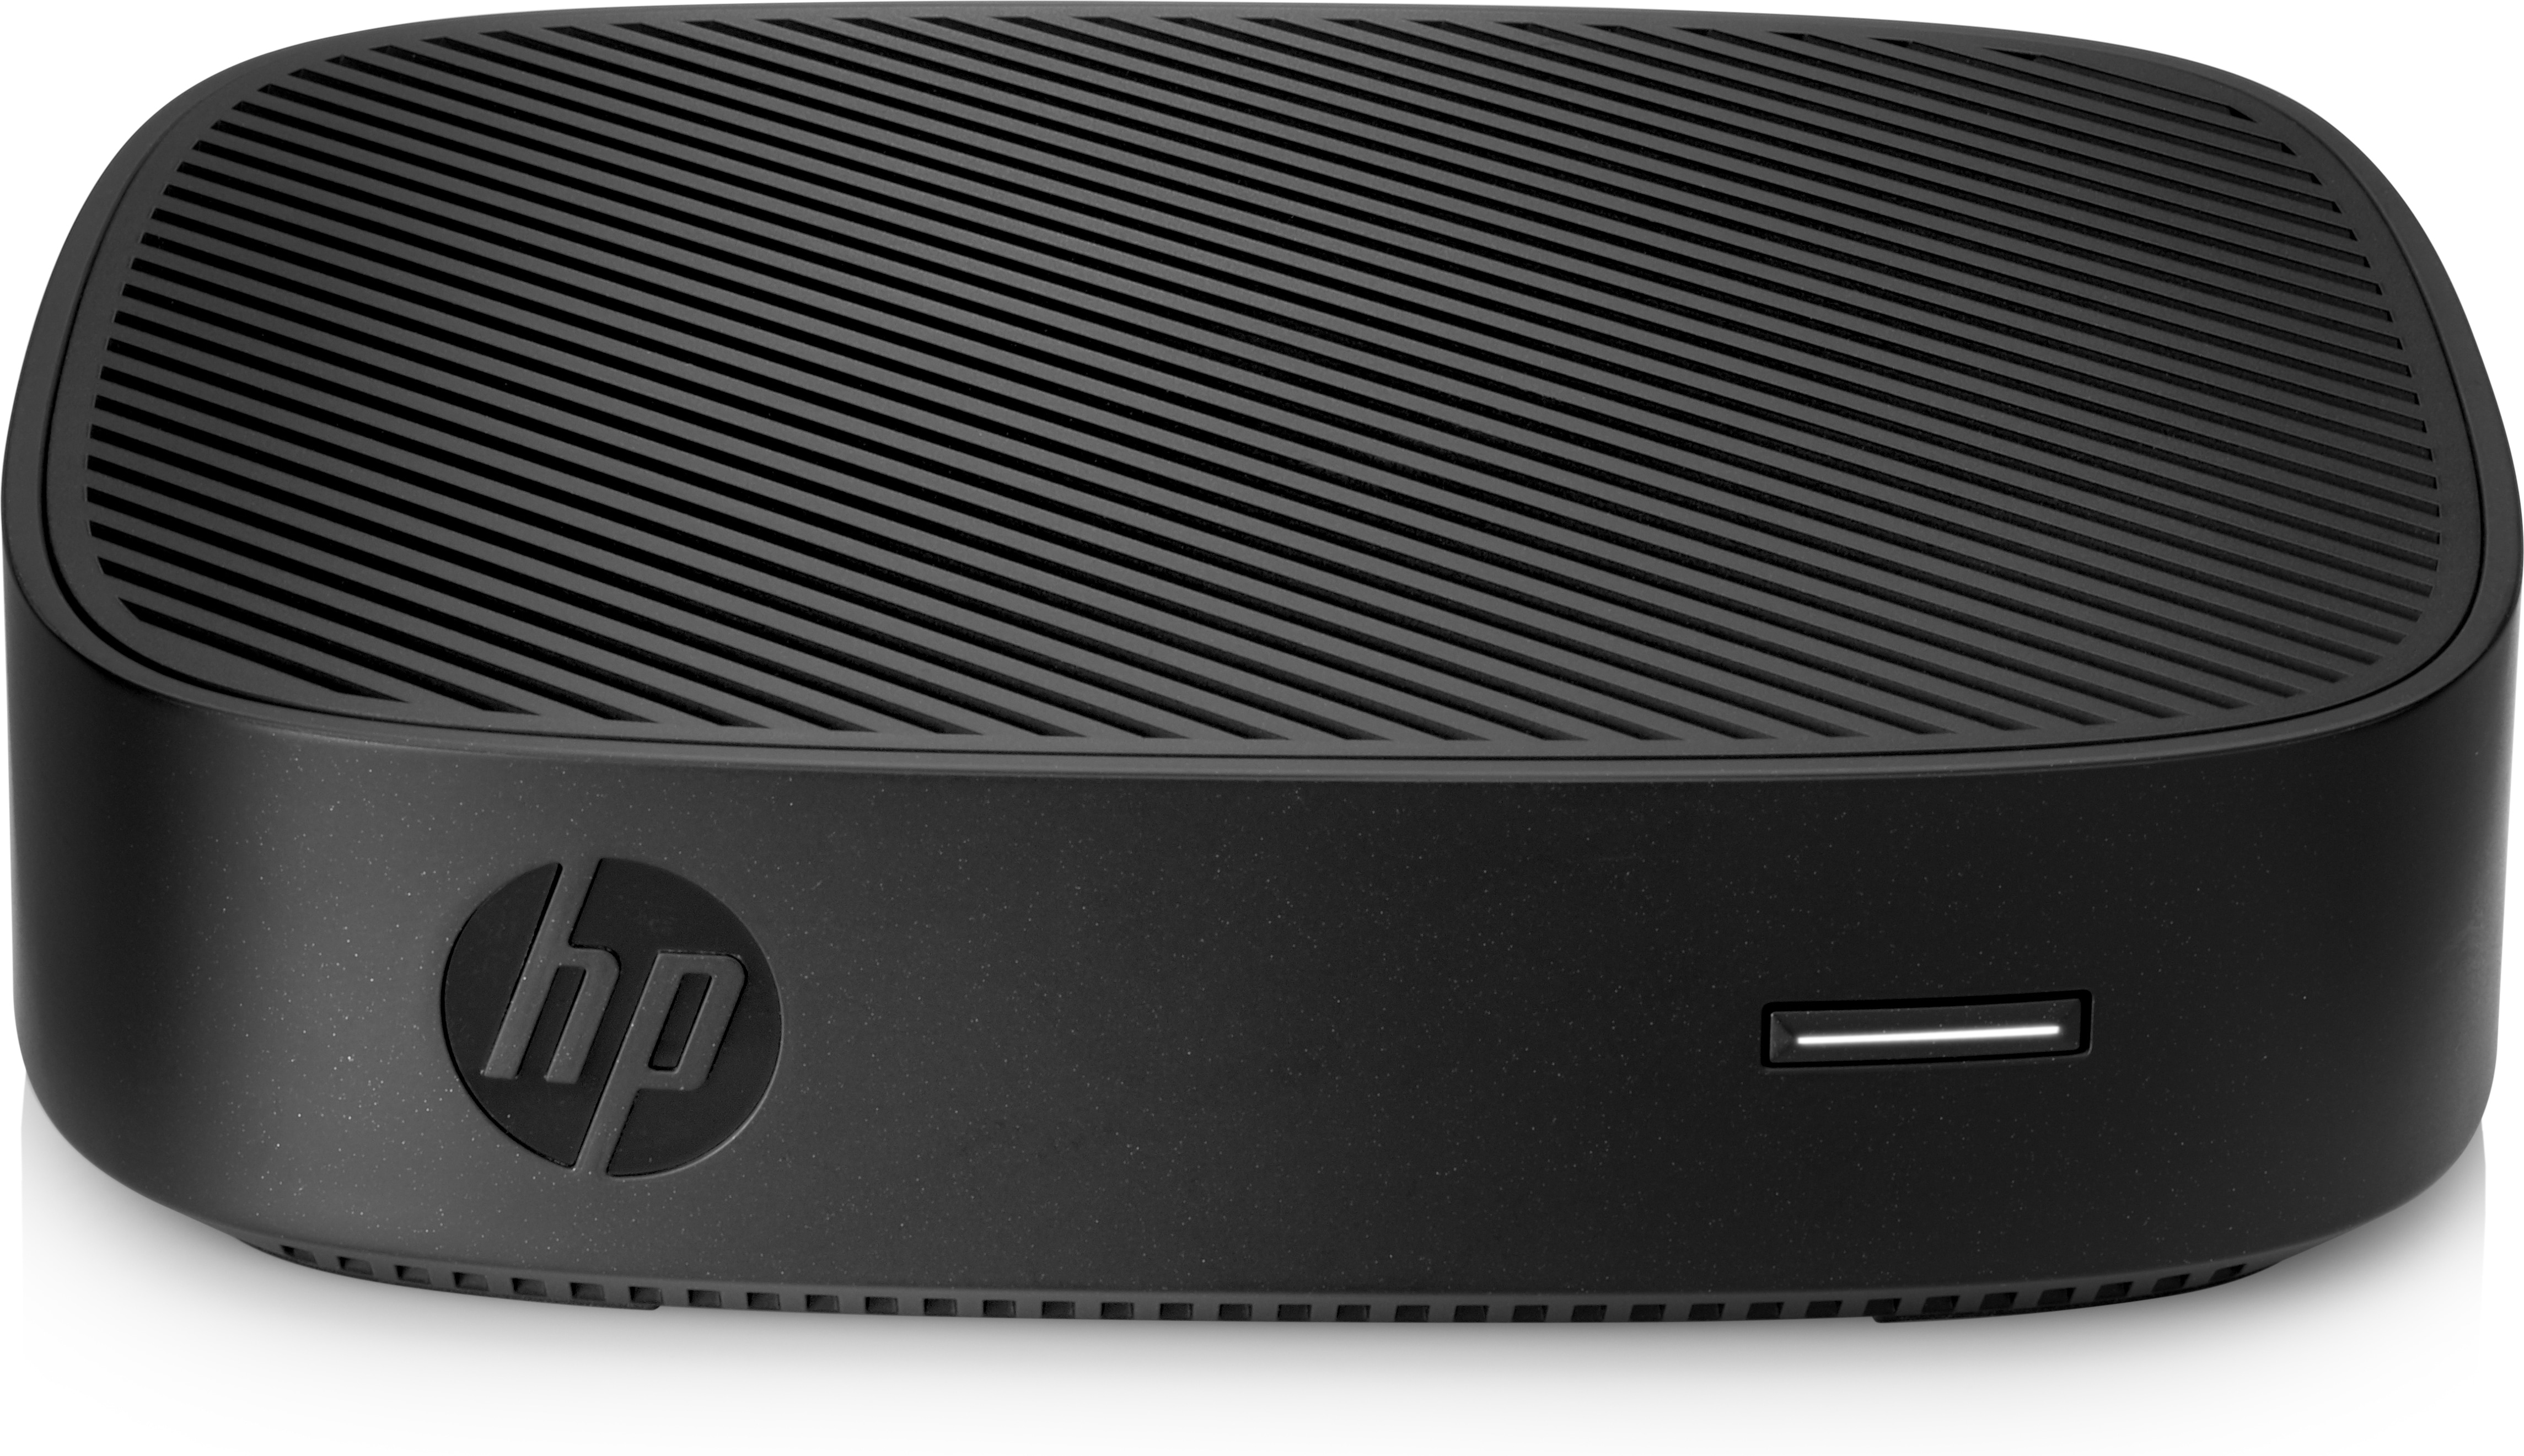 HP t430 - Thin client - DTS - 1 x Celeron N4000 / 1.1 GHz - RAM 4 GB - flash 32 GB - UHD Graphics 600 - GigE - Win 10 IoT Enterprise 64-bit - monitor: none